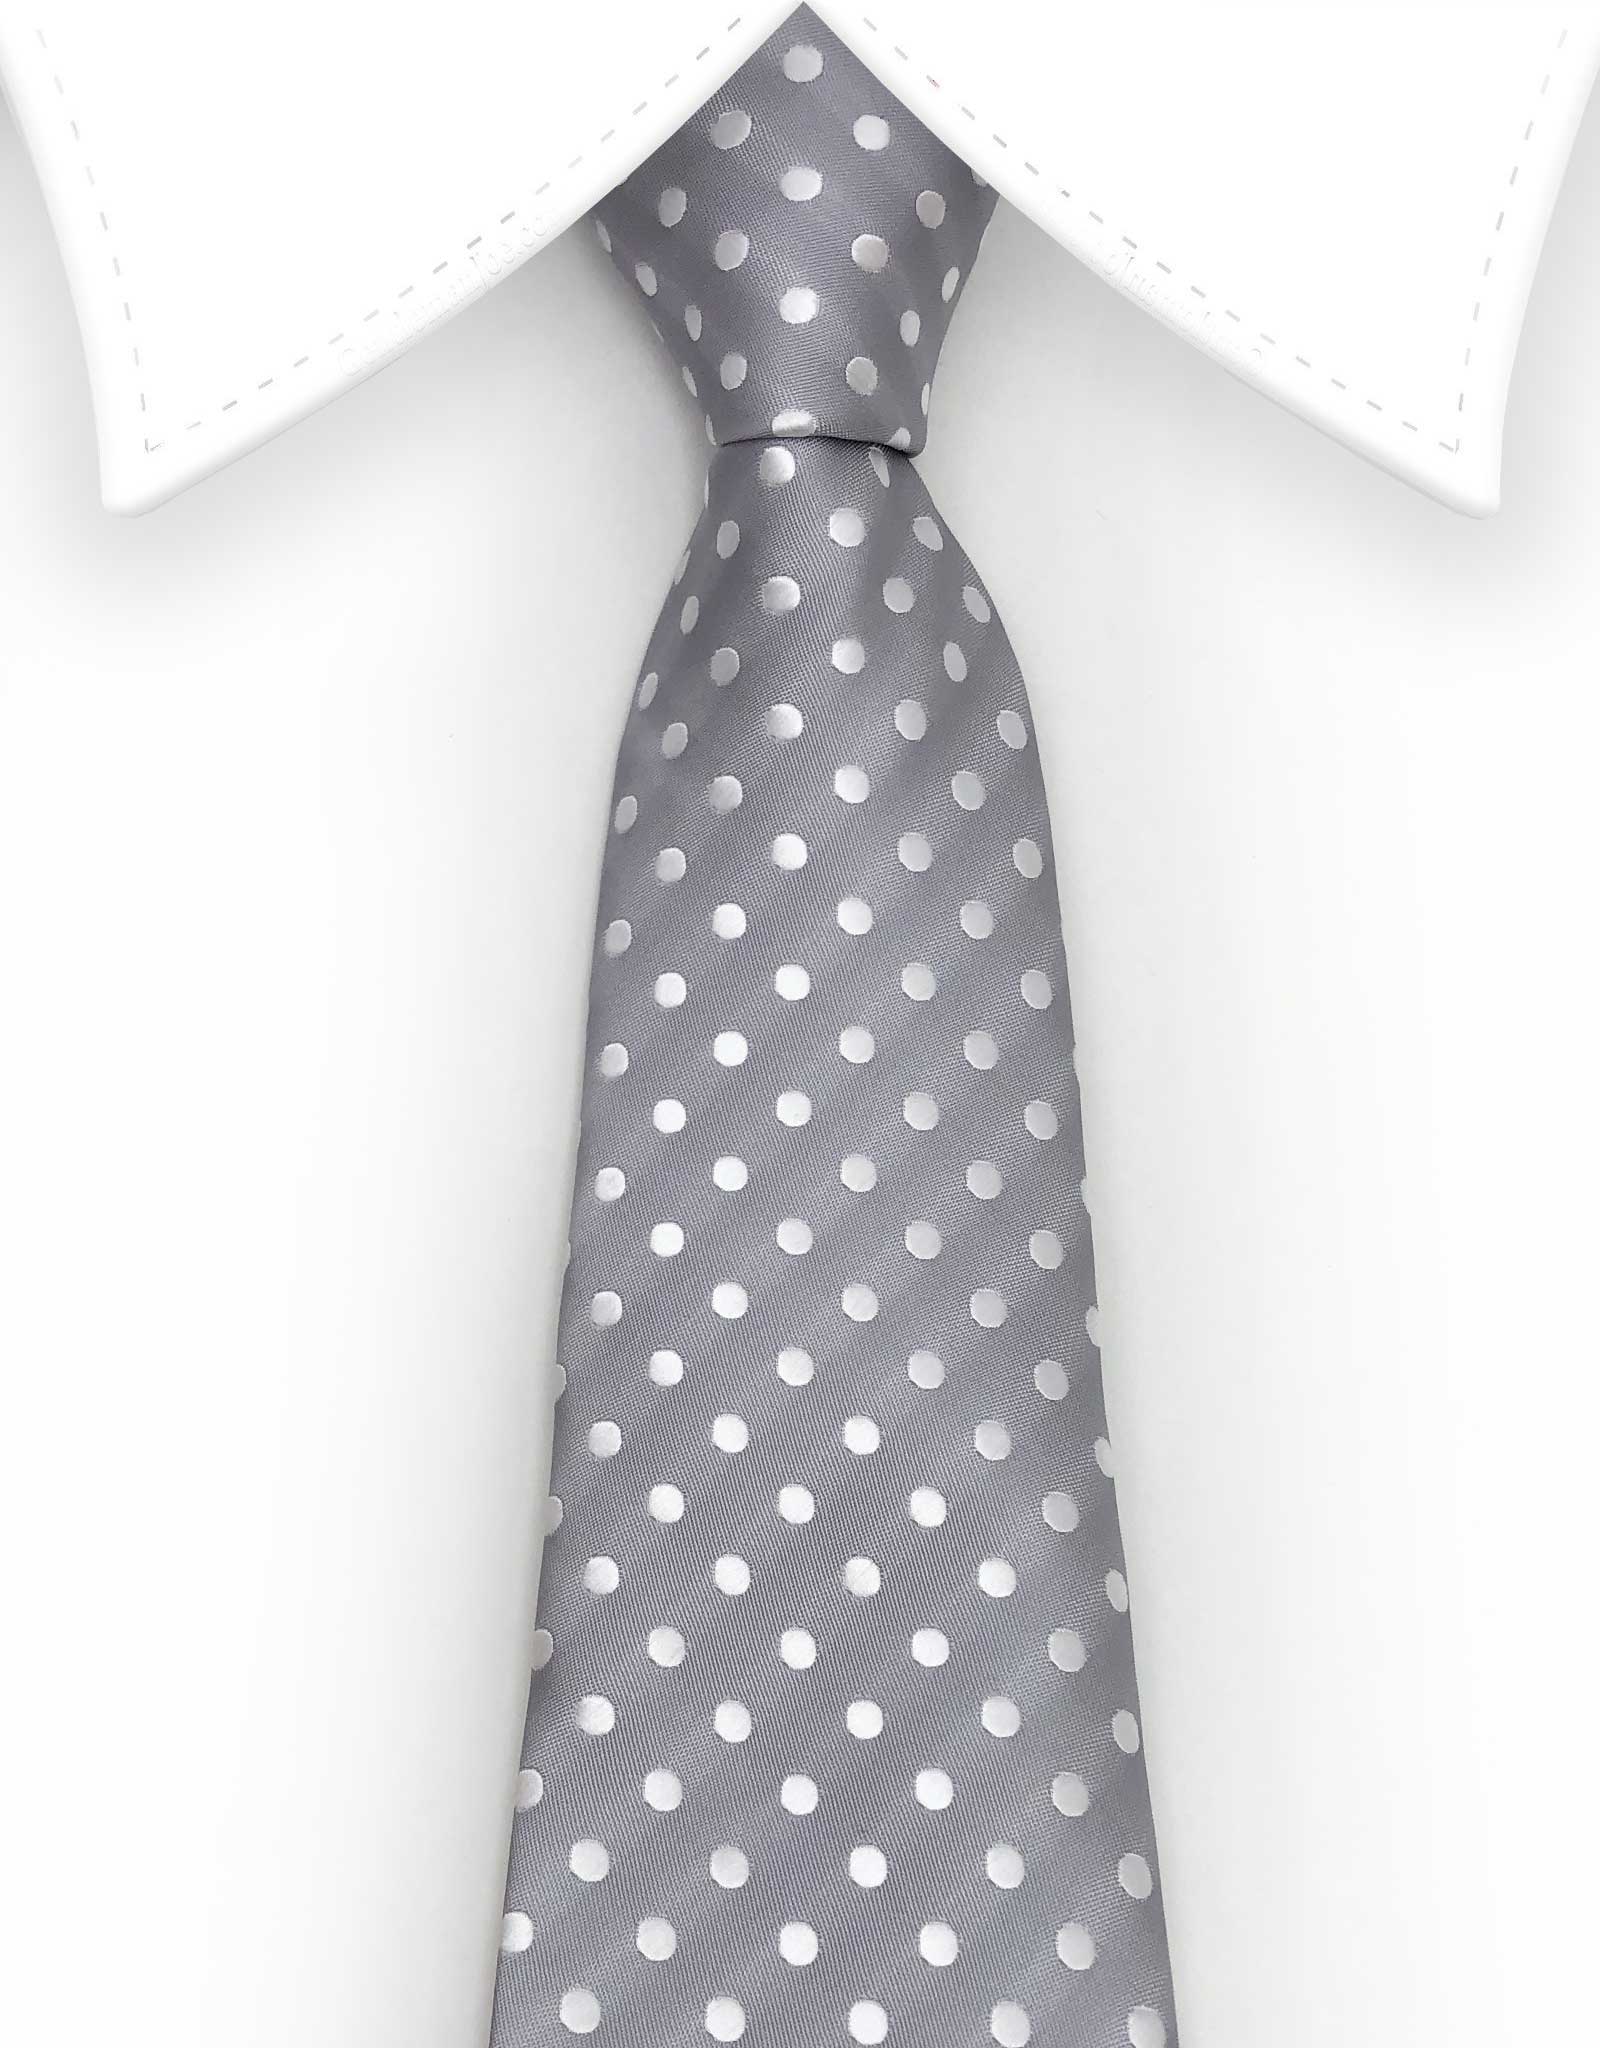 Elegant Silver Tie with white polka dots